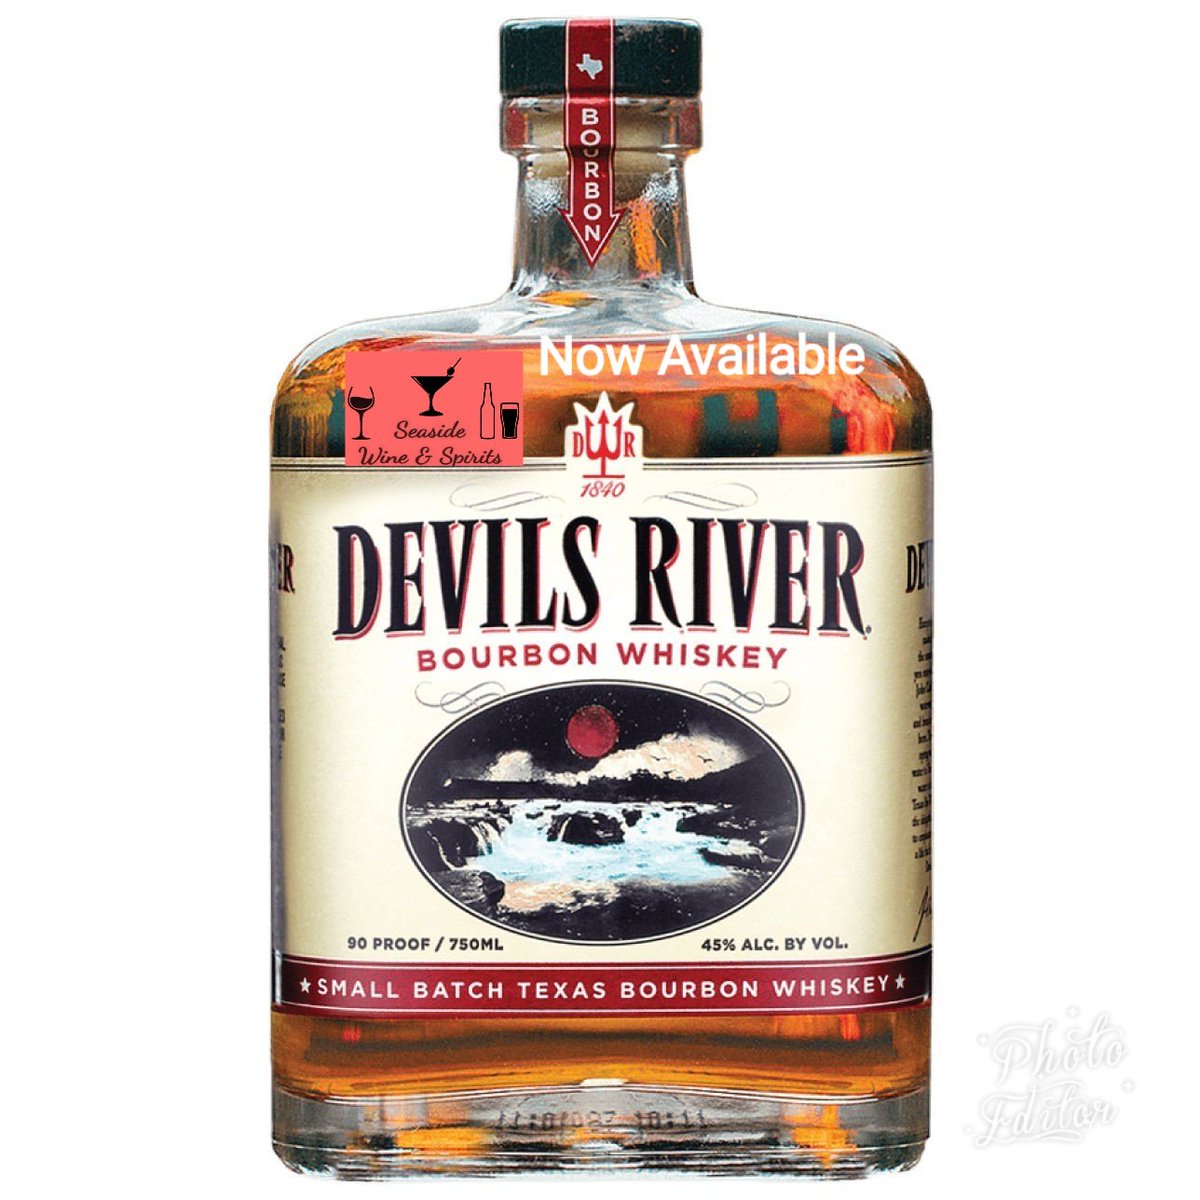 Here's what's new this week
Devil's River Bourbon Whiskey 45%
#seasidewineandspirits #devilsriverwhiskey #devilsriverbourbon #bourbon2019 #whiskey 
 #seasidewineandspiritsfamily #legendnottourist  
#bestinbridgewaterma  #bestinbridgewater